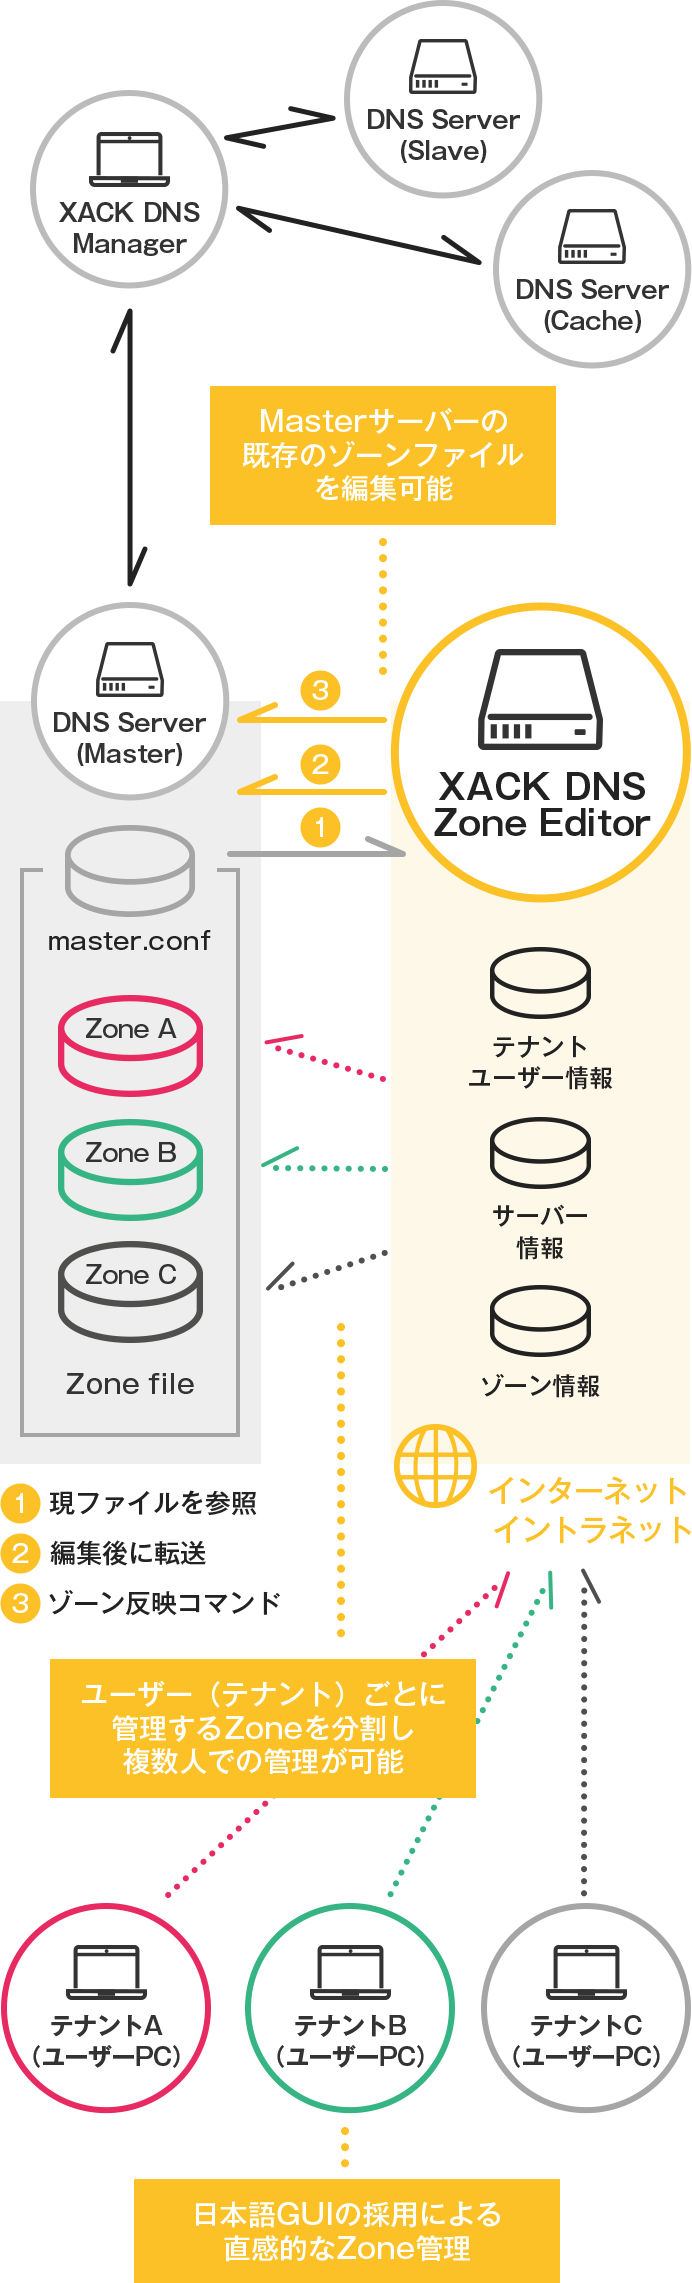 XACK DNS Zone Editorの図解